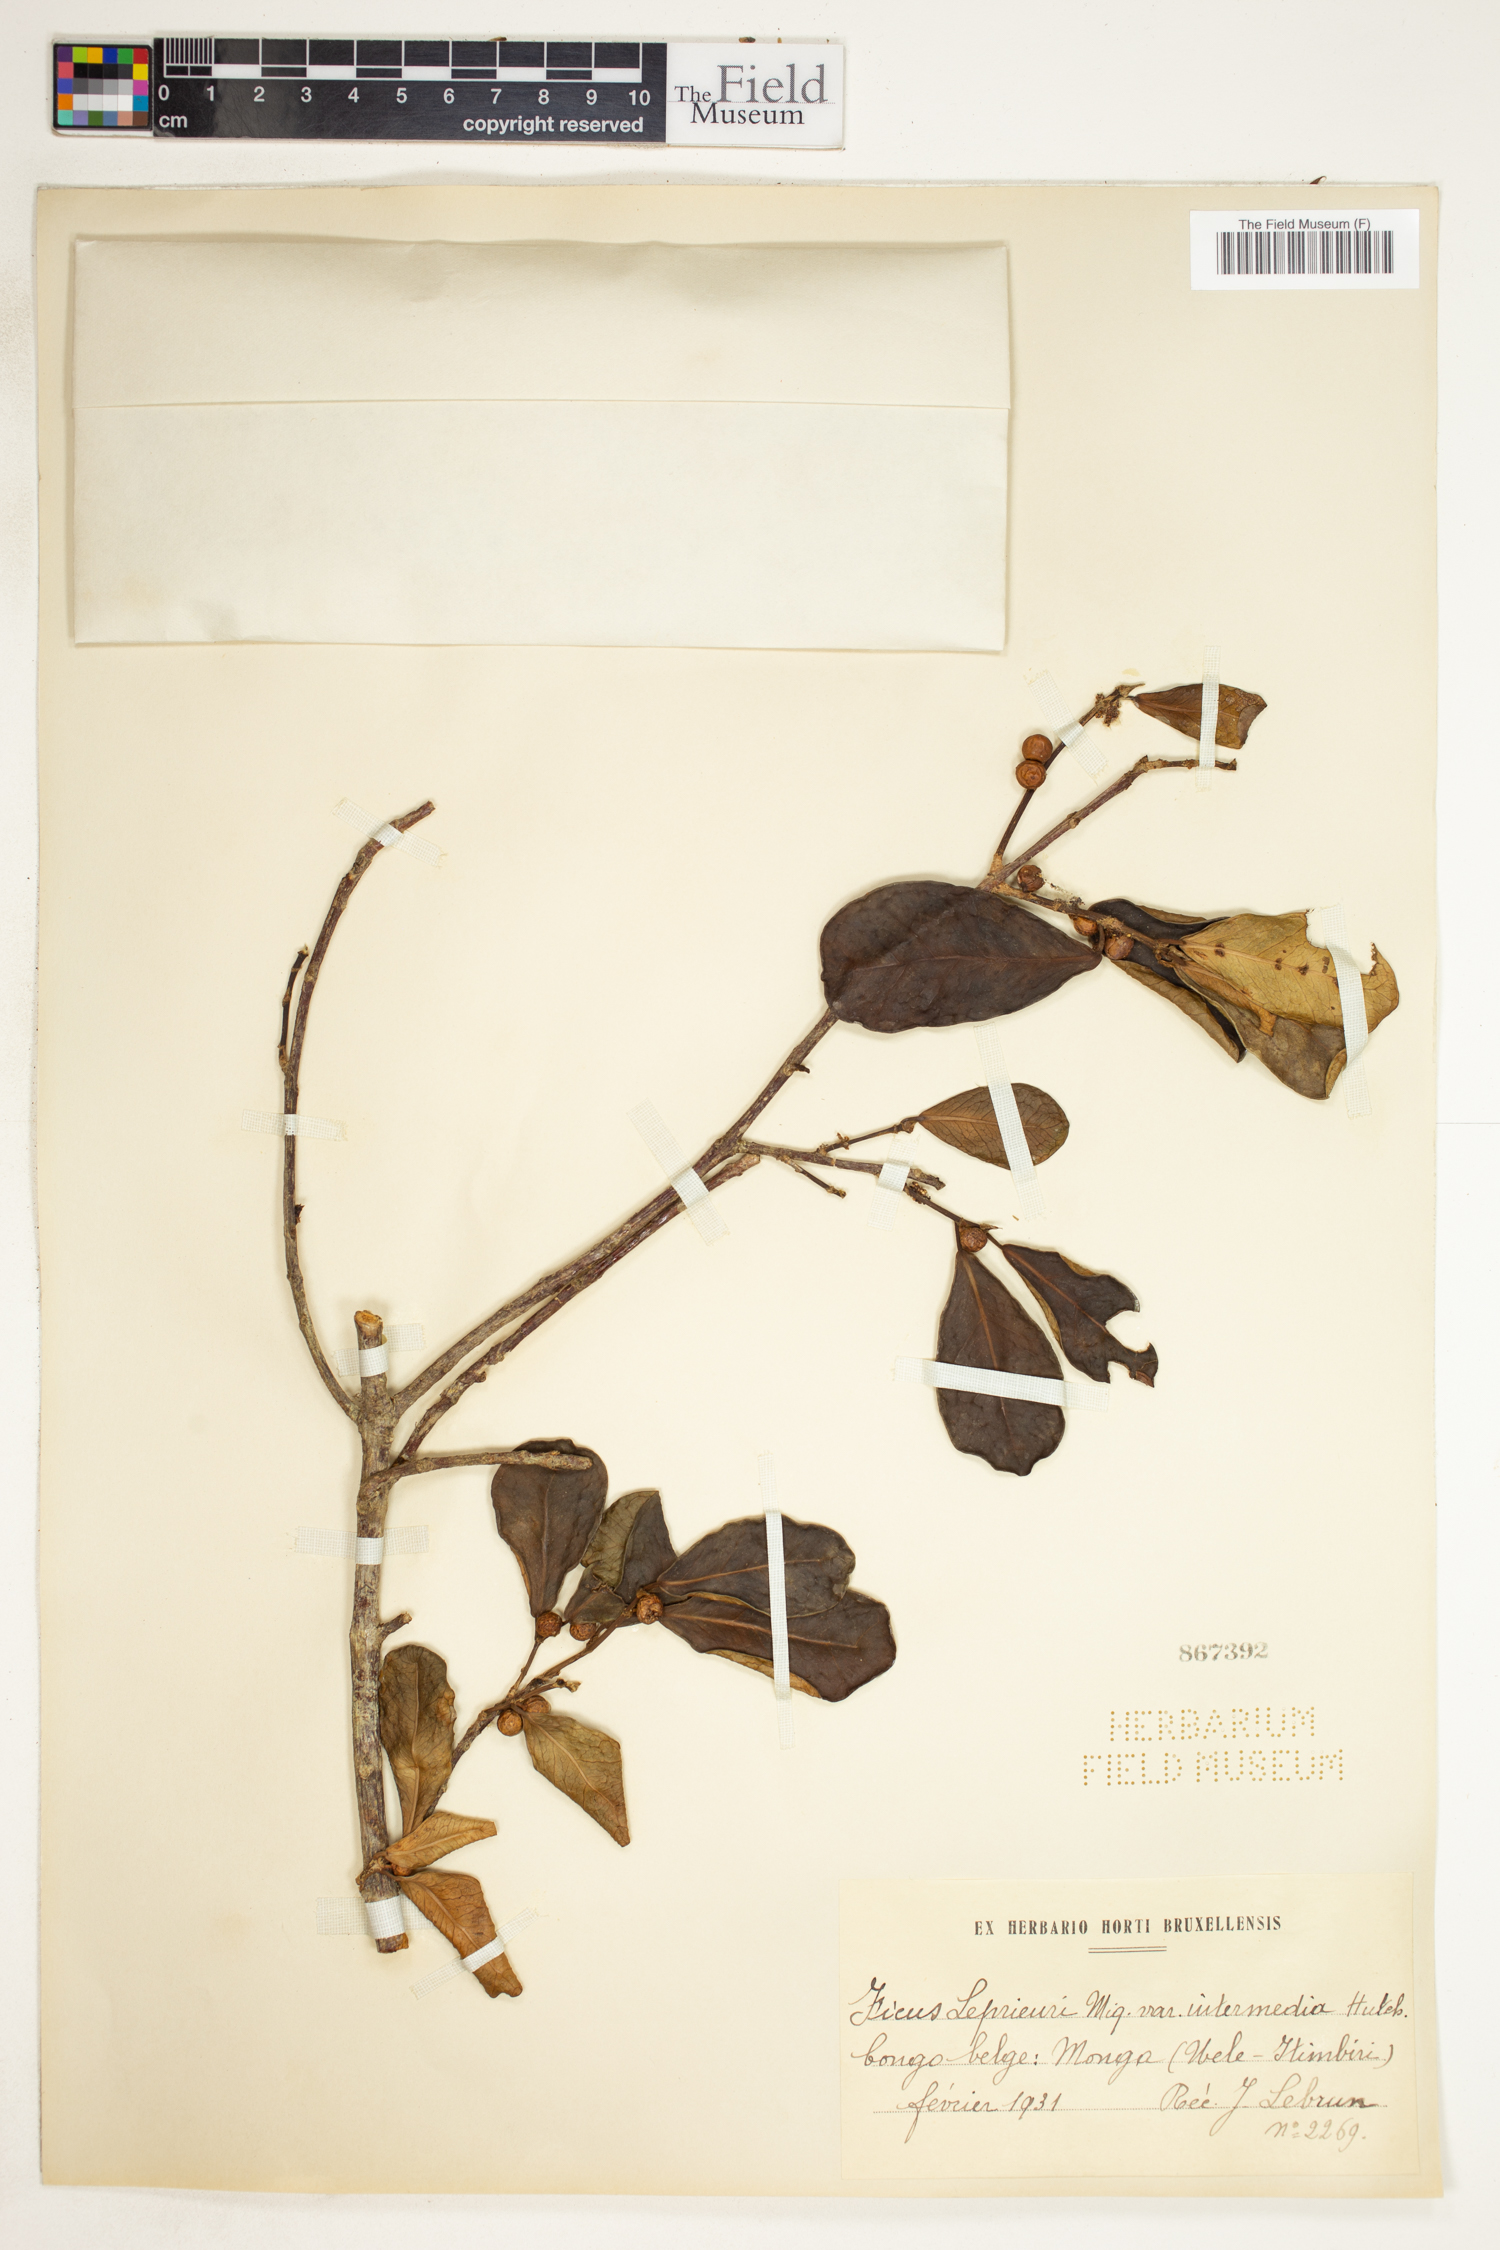 Ficus natalensis subsp. leprieurii image